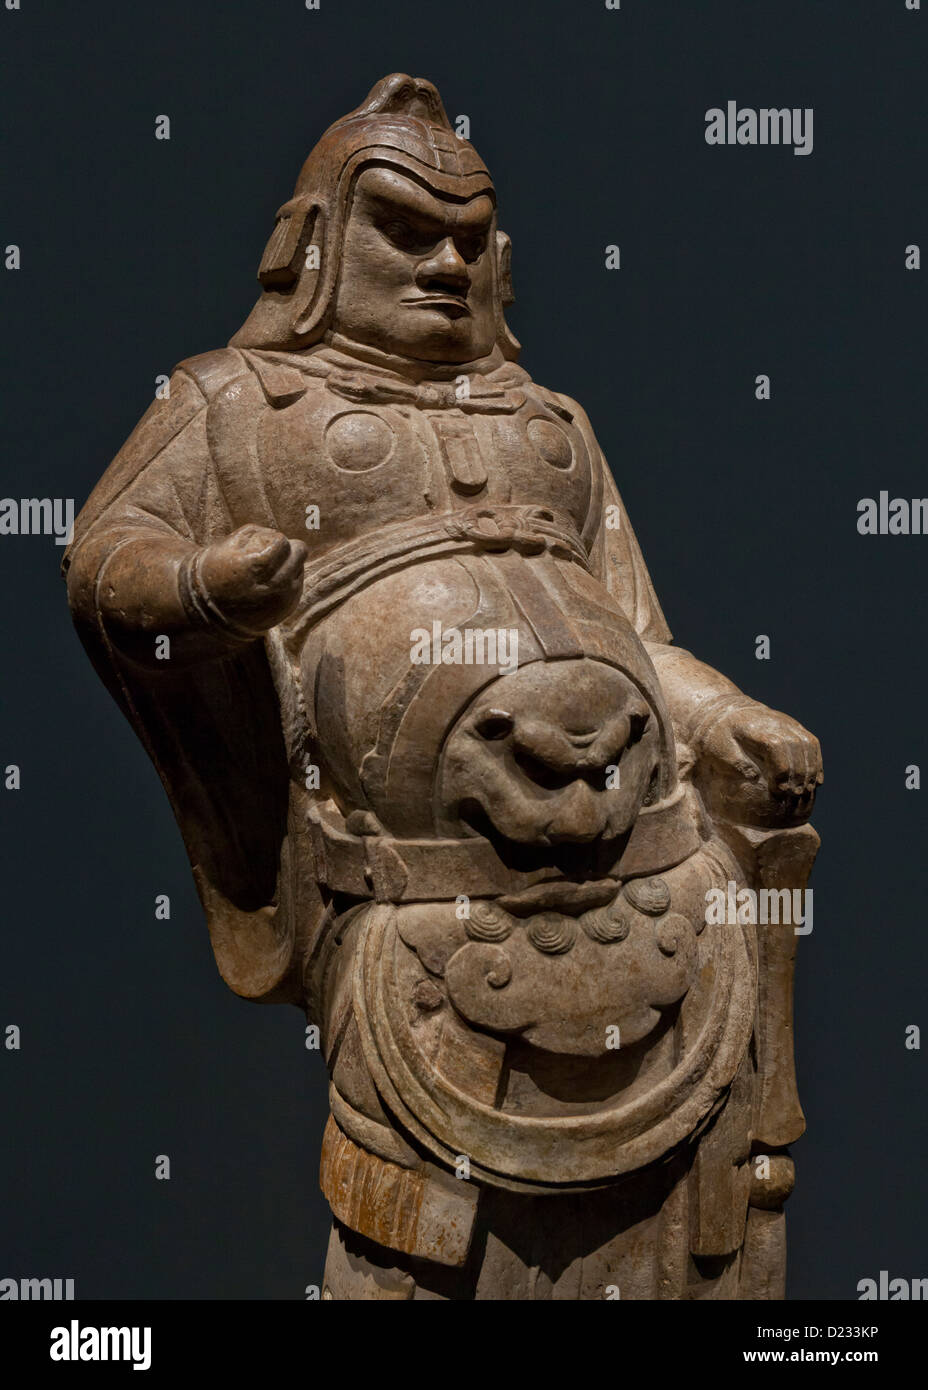 Tempio buddista custode scultura, dinastia Tang, il settimo secolo, Cina Foto Stock